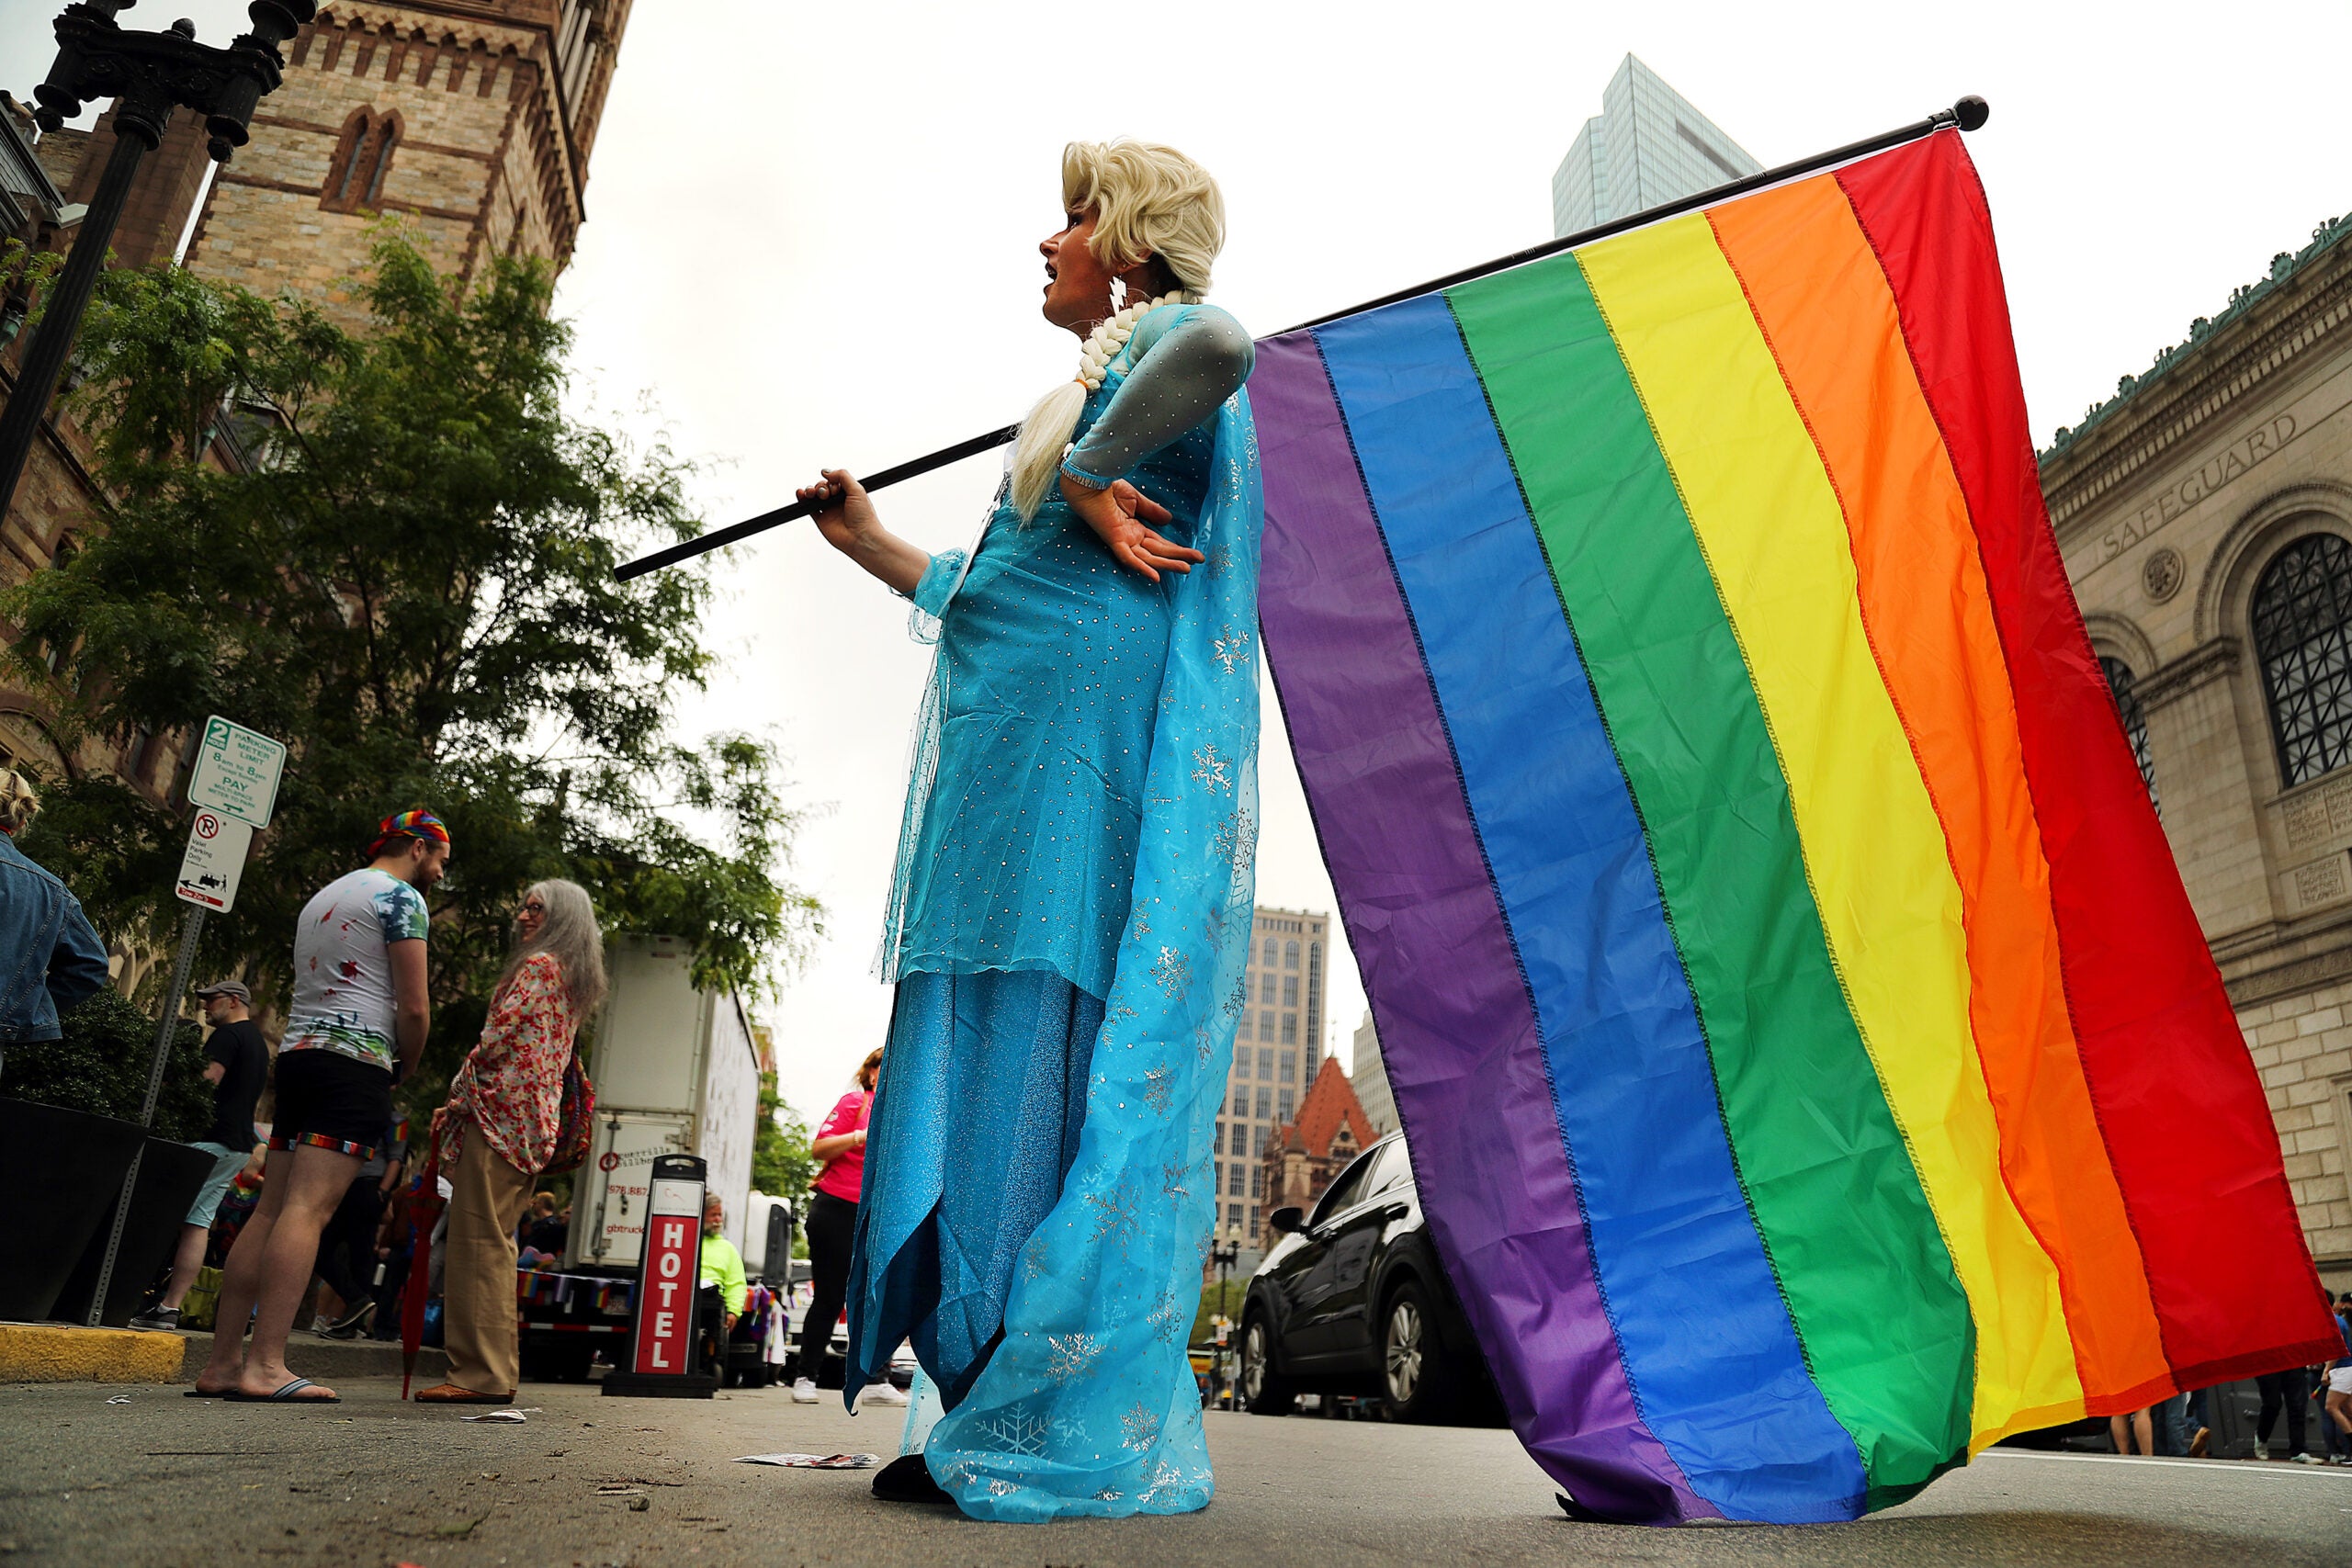 23 photos and videos from Saturday's Boston Pride parade